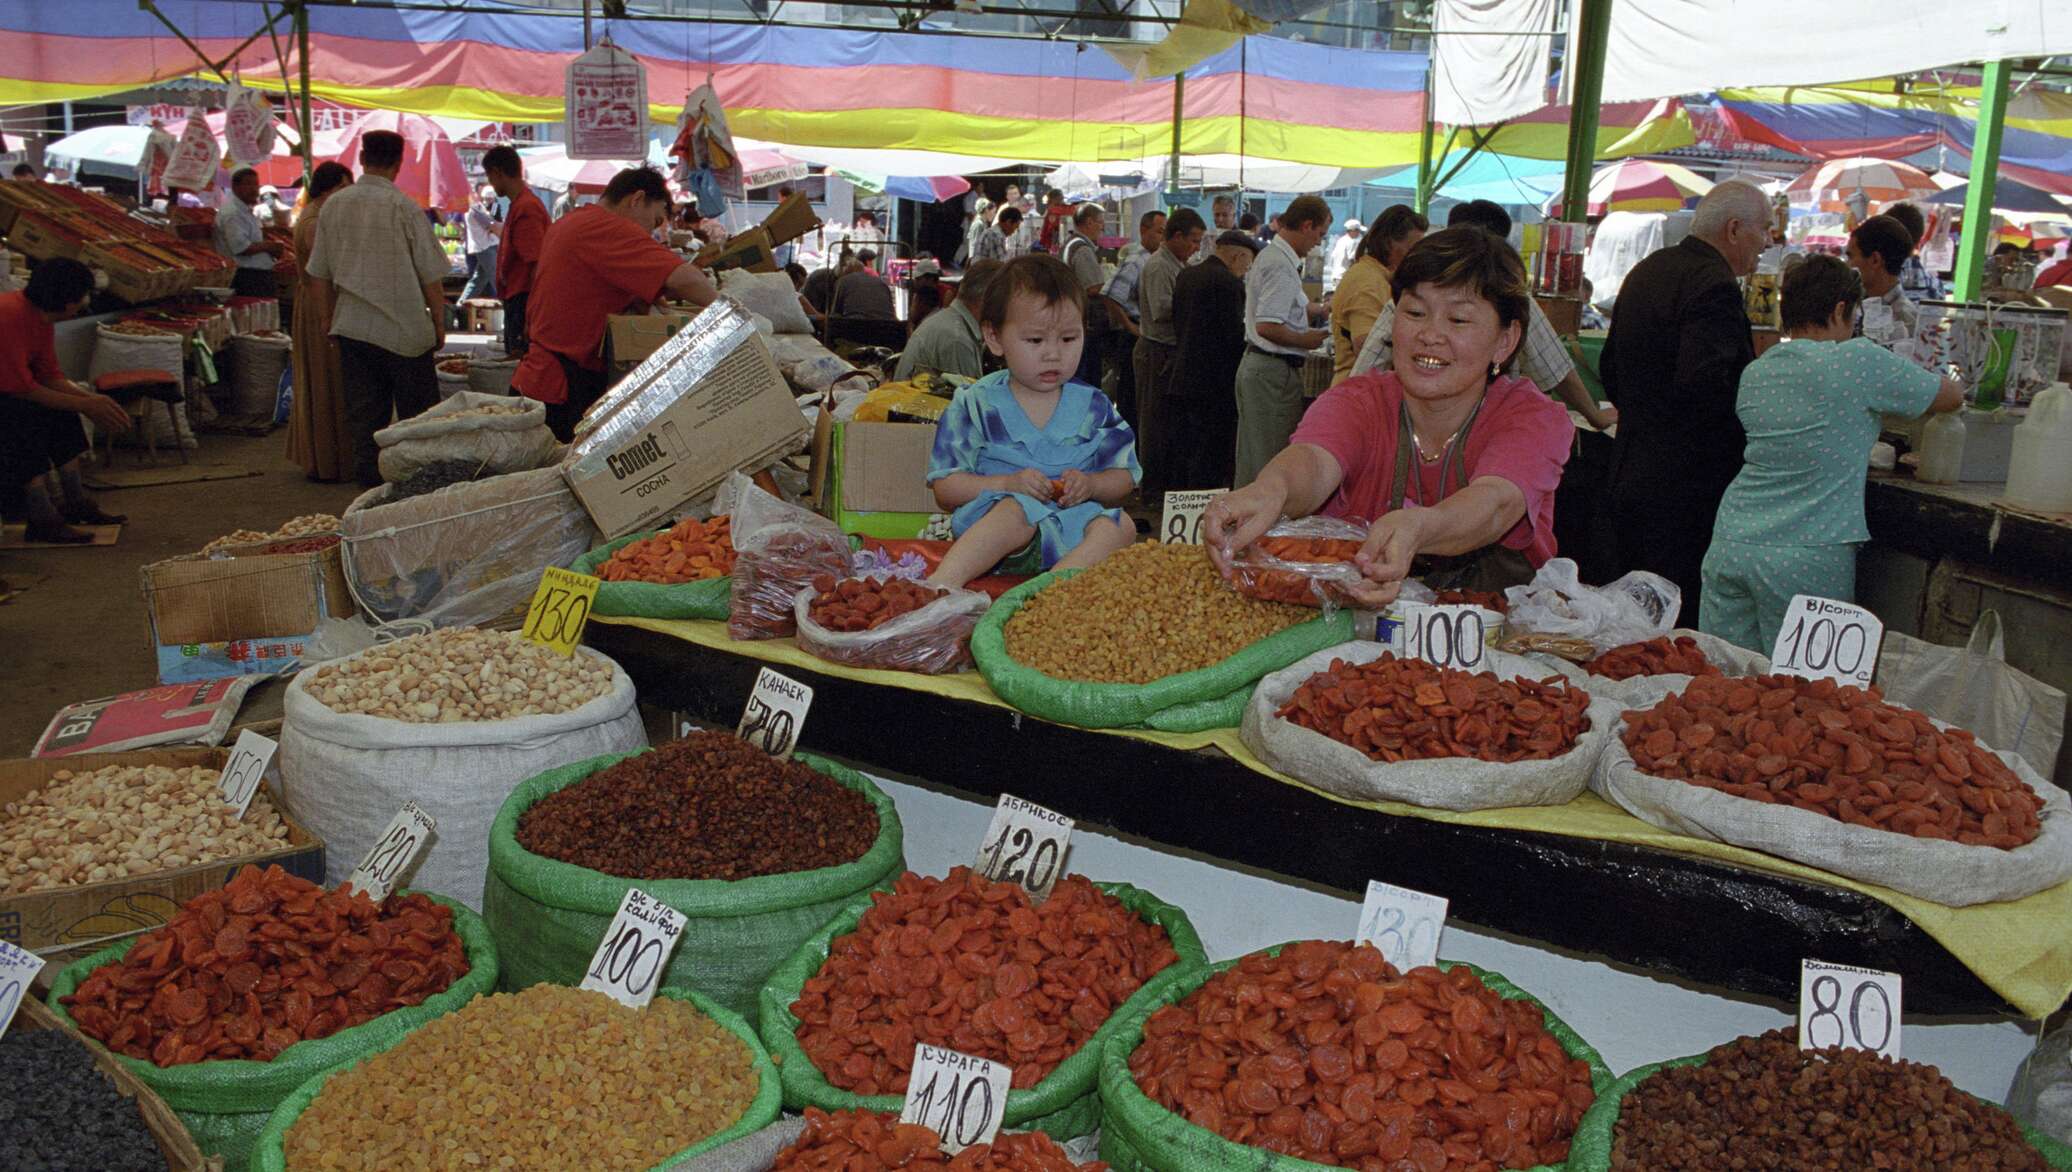 Ош цены. Ошский базар в Бишкеке. Ошский рынок в Бишкеке. Ош базар Бишкек. Баткен базар в Бишкеке.